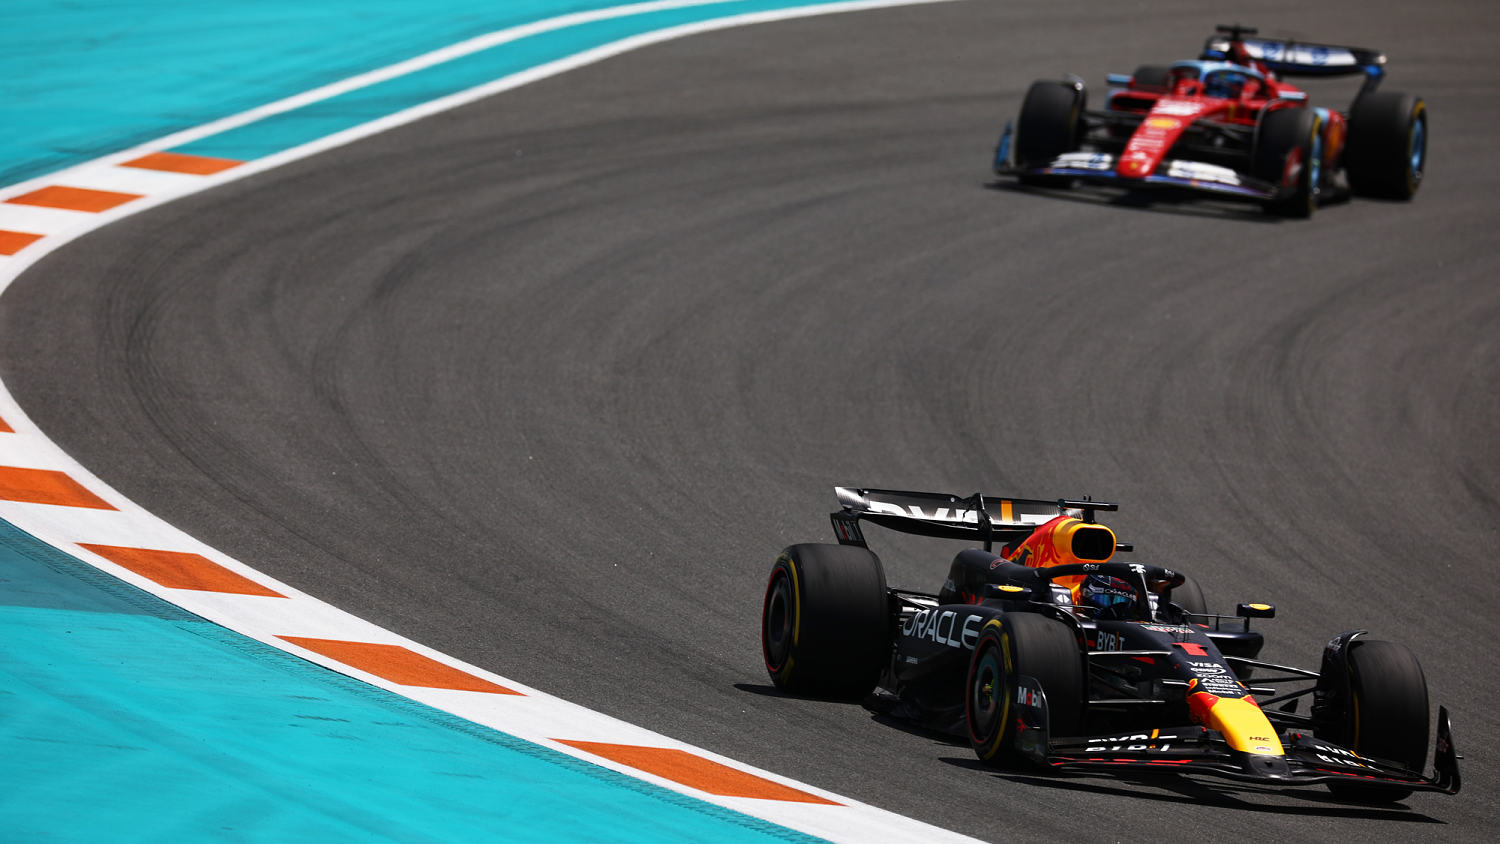 McLaren's Lando Norris wins first Formula 1 race at thrilling Miami Grand Prix